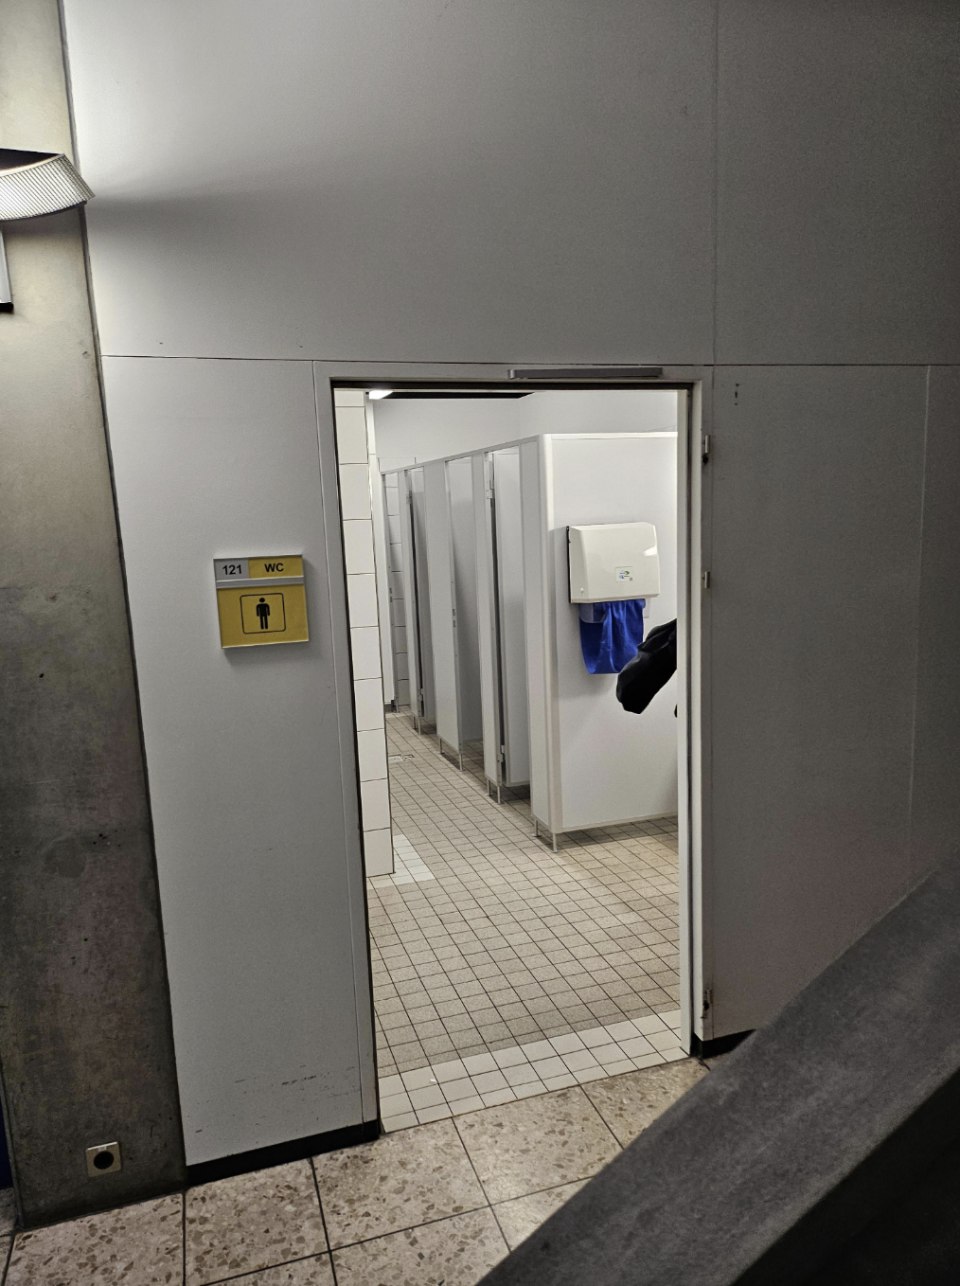 Public restroom interior with open stall doors and visible toilet paper dispenser; individual's foot seen under one door